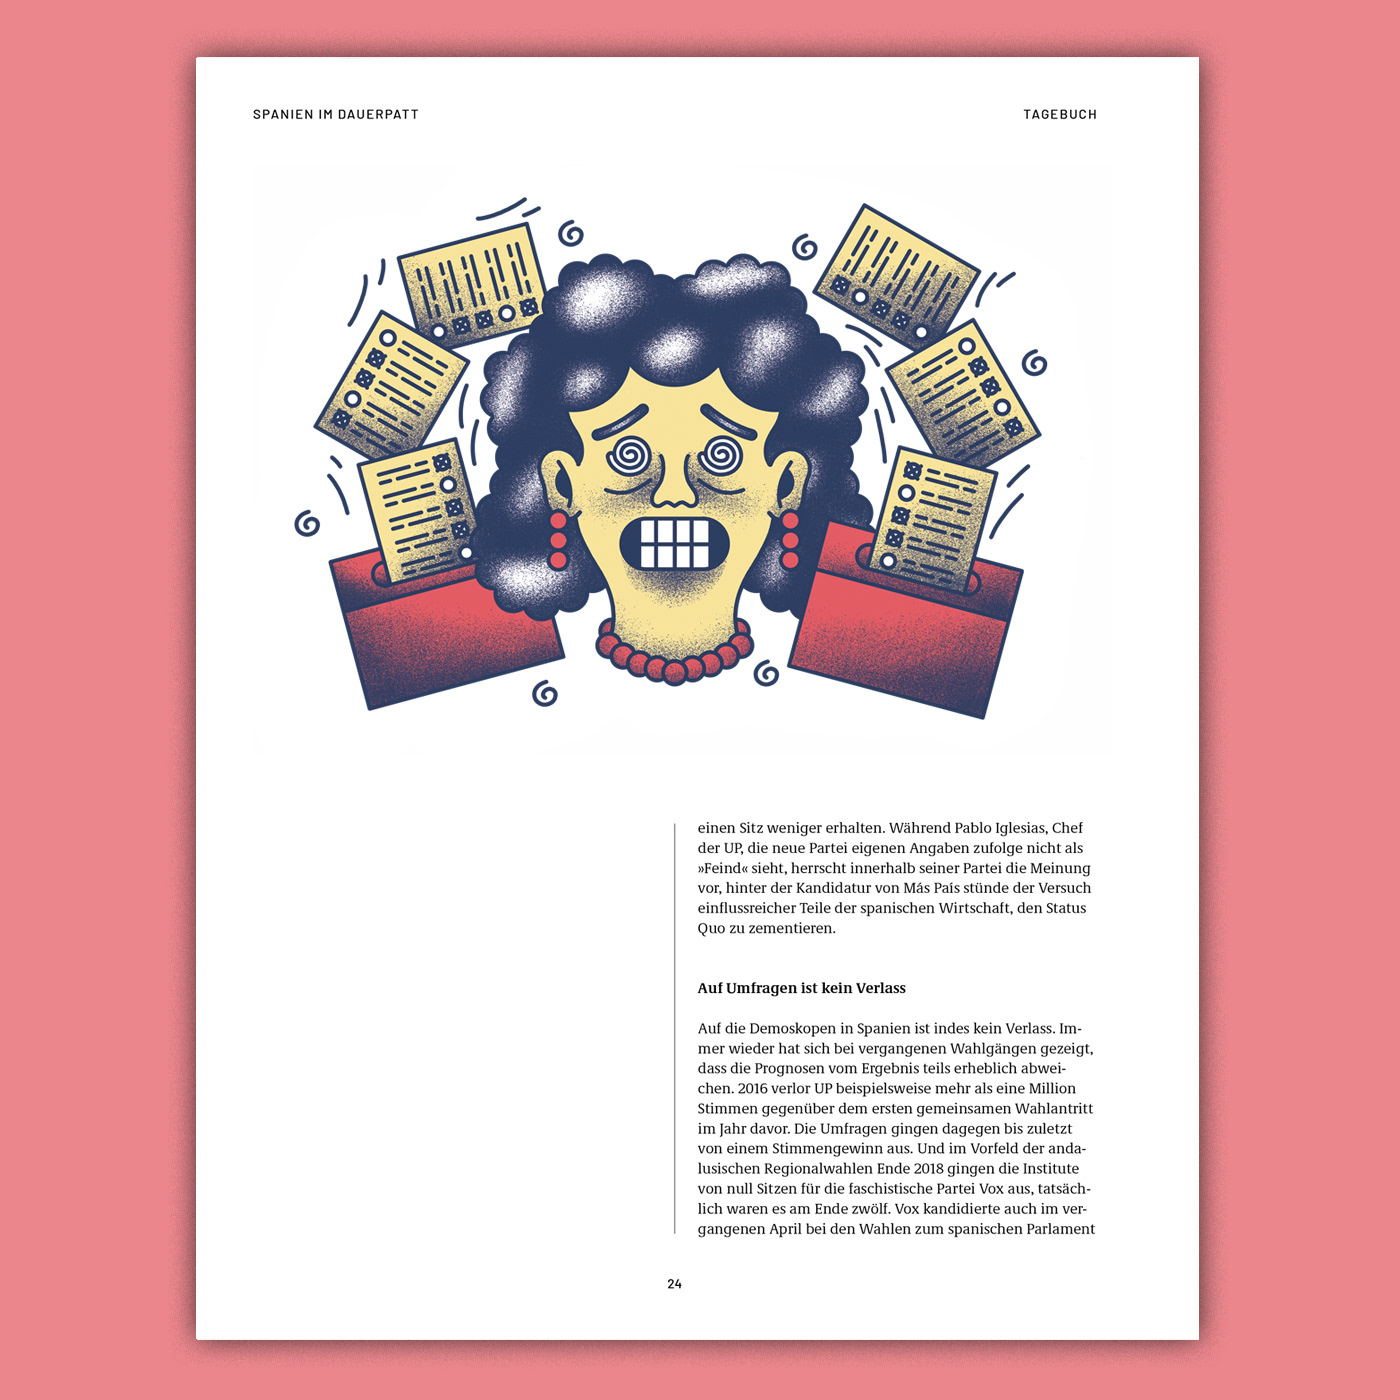 Tagebuch hamburg wien politik abstrakt photoshop texture editorial Character politics